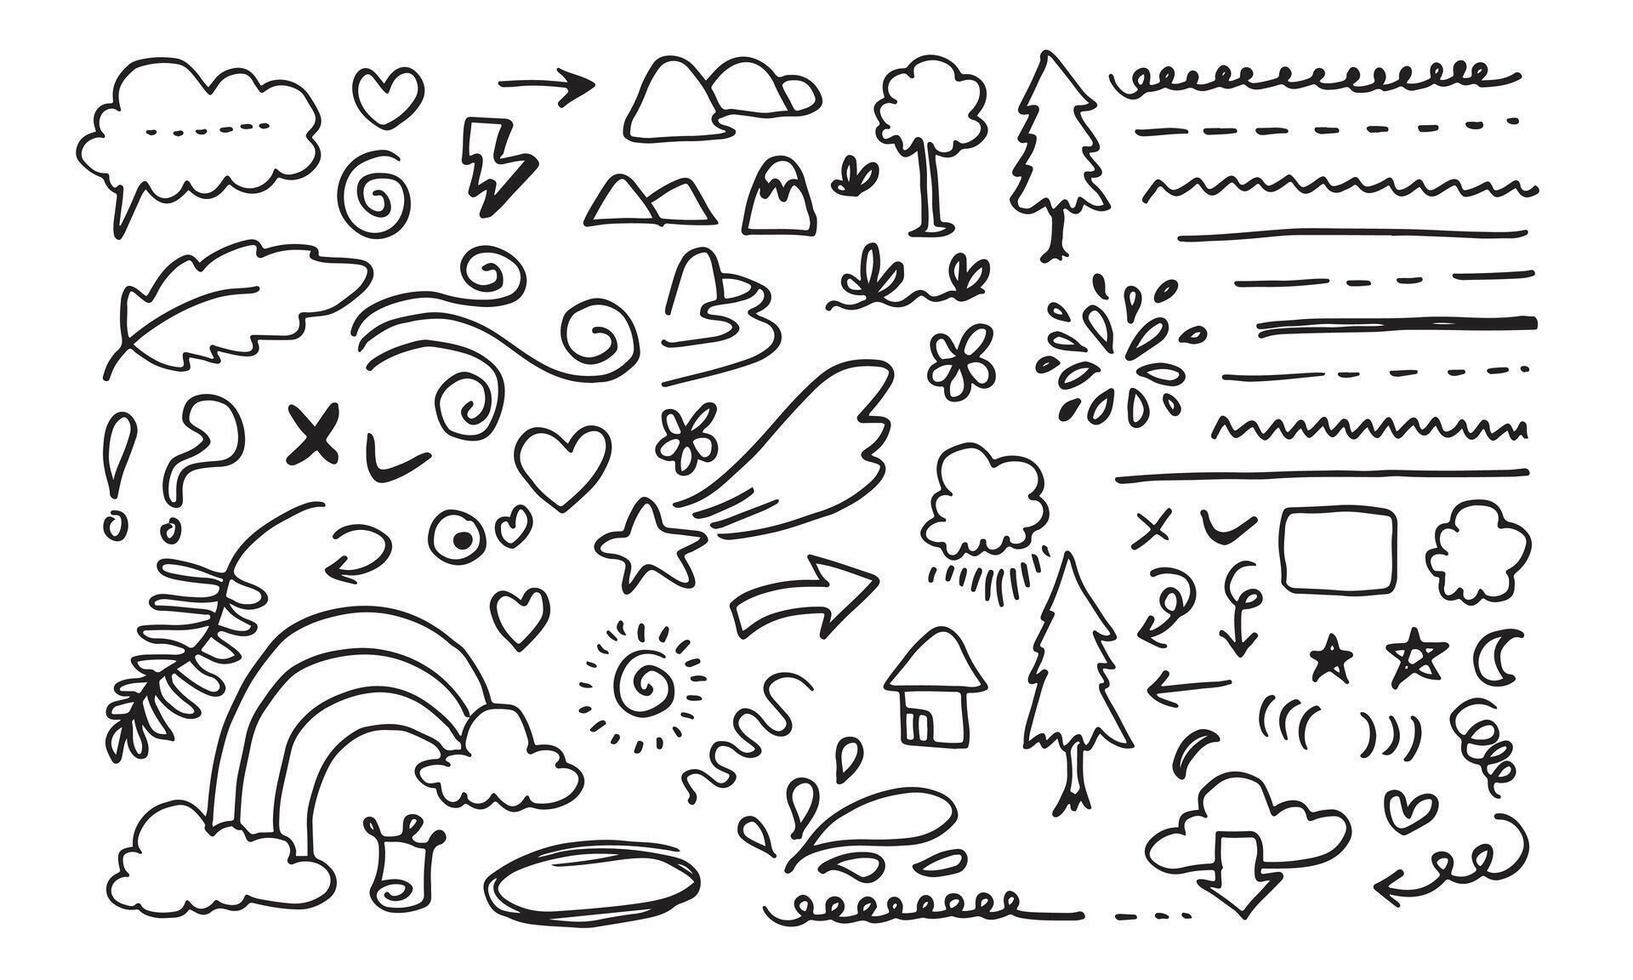 Hand drawn doodle design elements, black on white background. wind, swoops, emphasis, Arrow, crown, line, hill. doodle sketch design elements vector